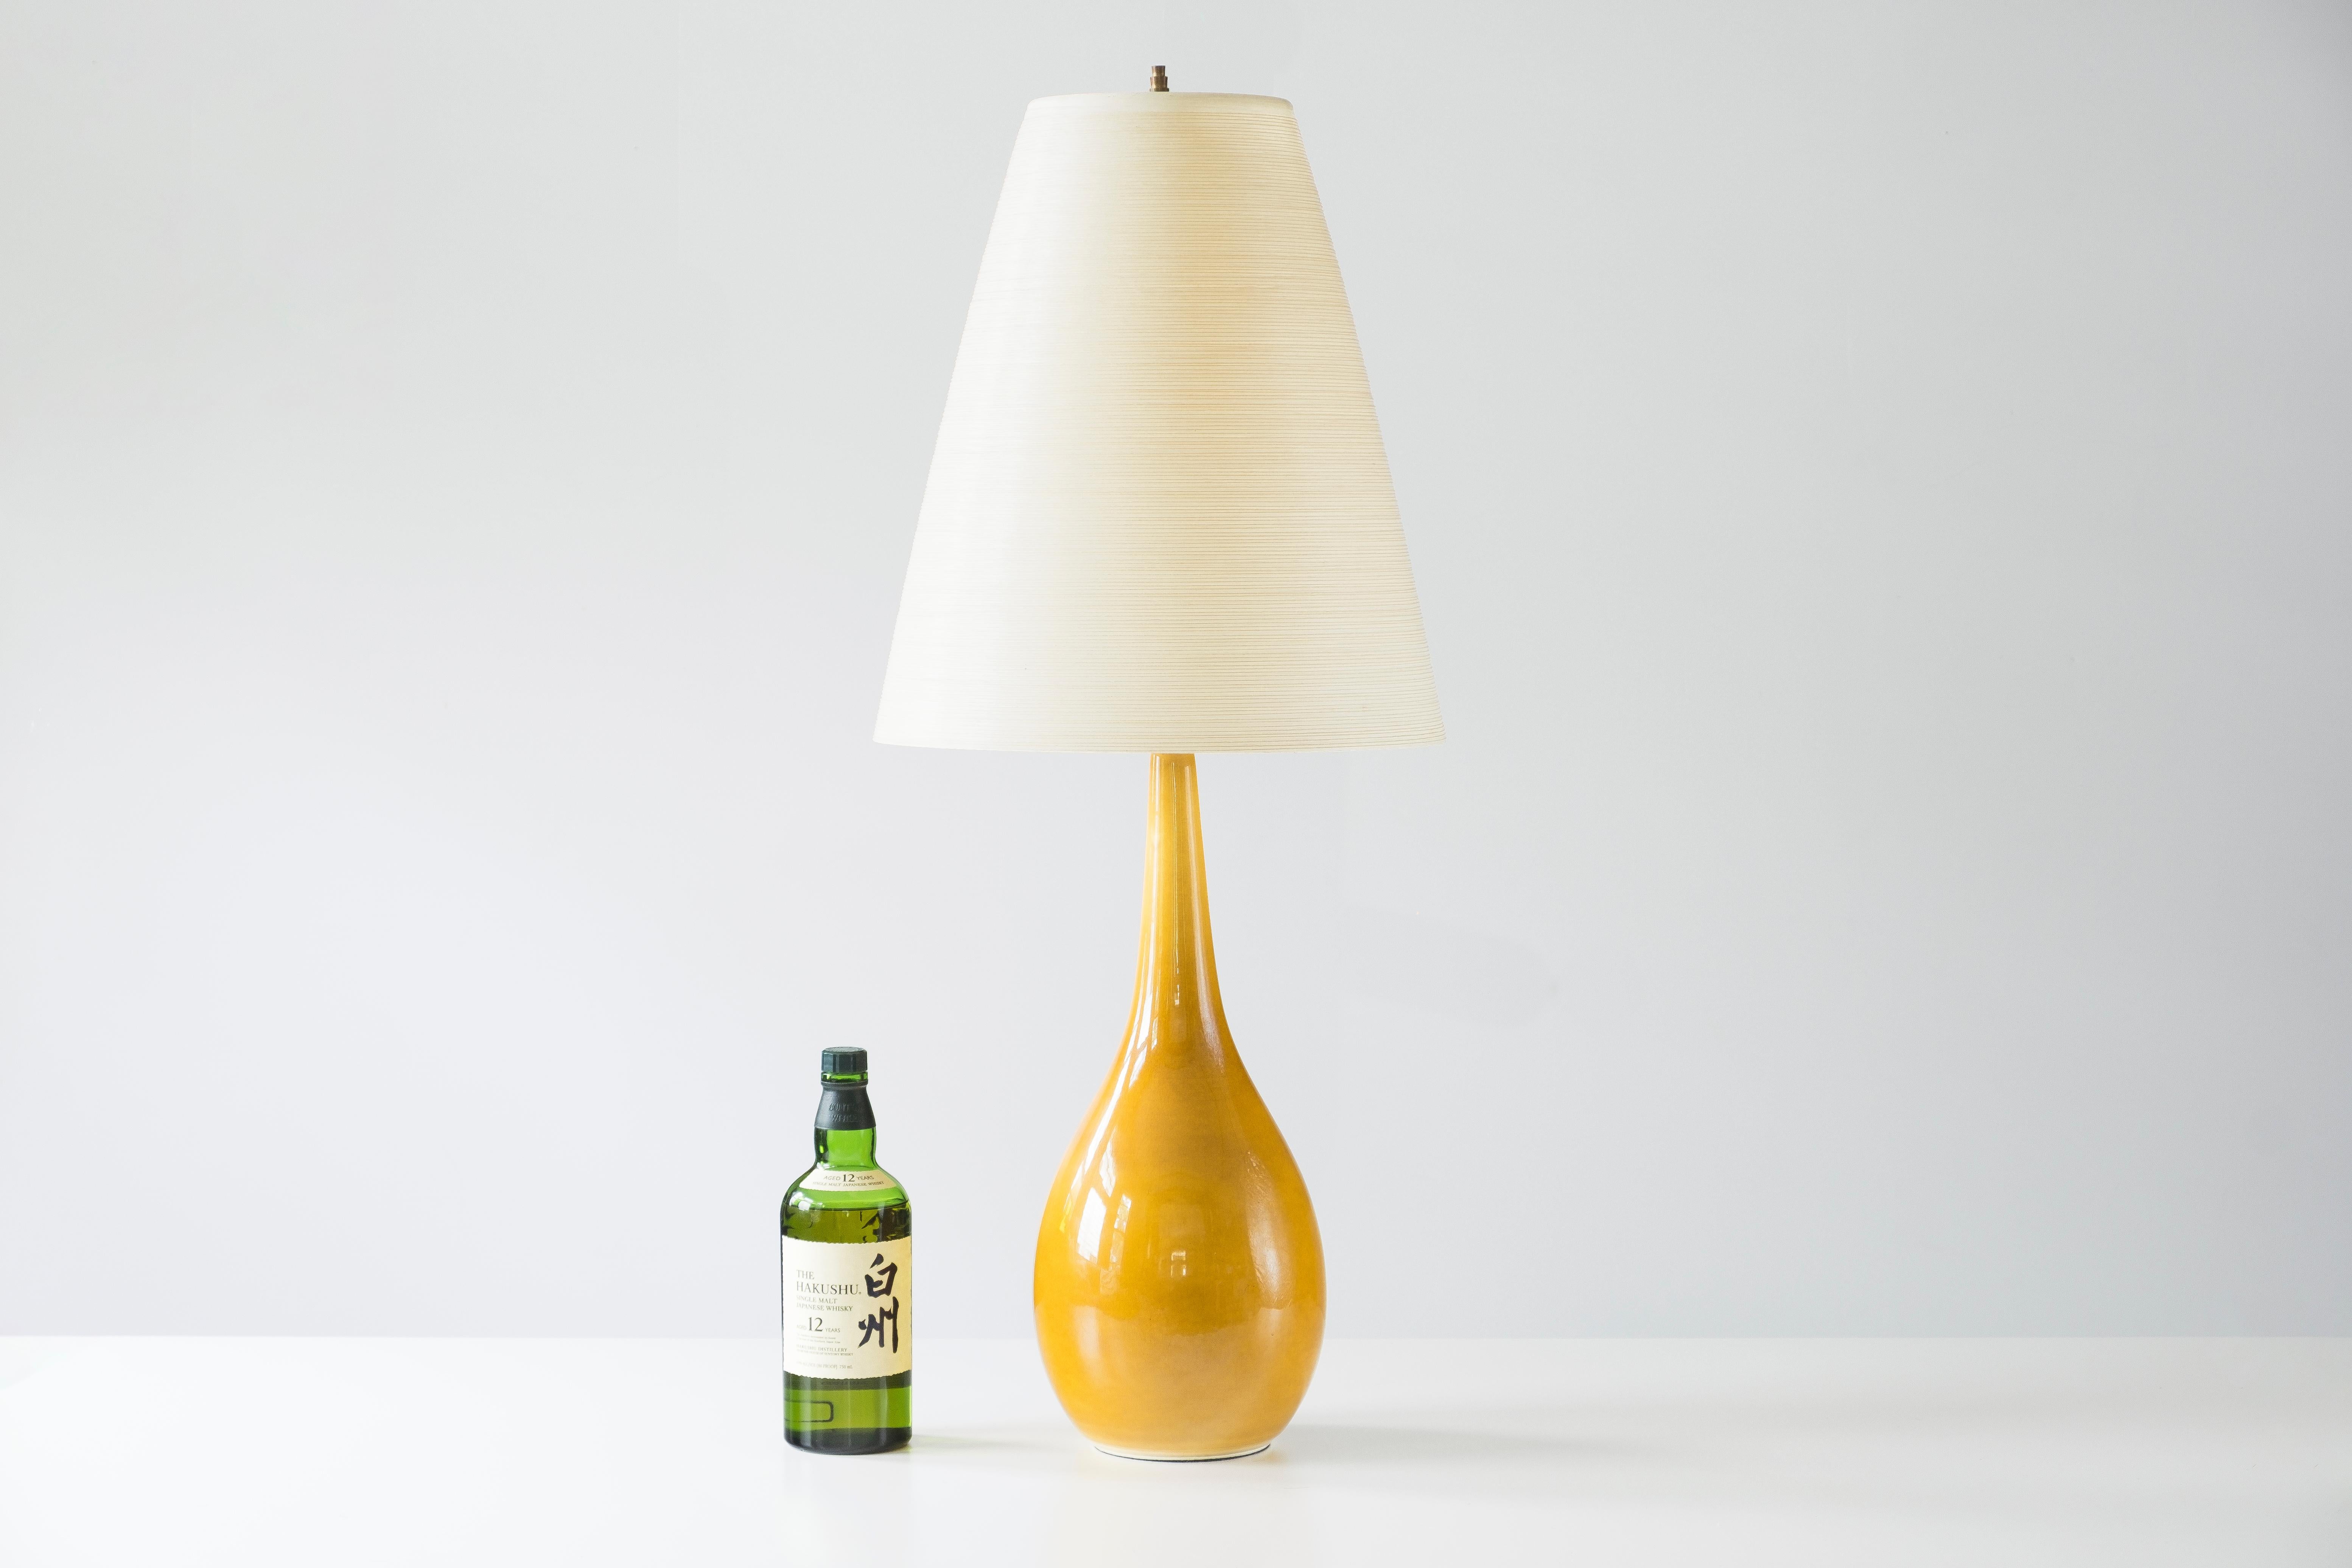 Canadian Lotte Bostlund Lamp, Model 100, Tall Ceramic Lamp with Fiberglass Shade